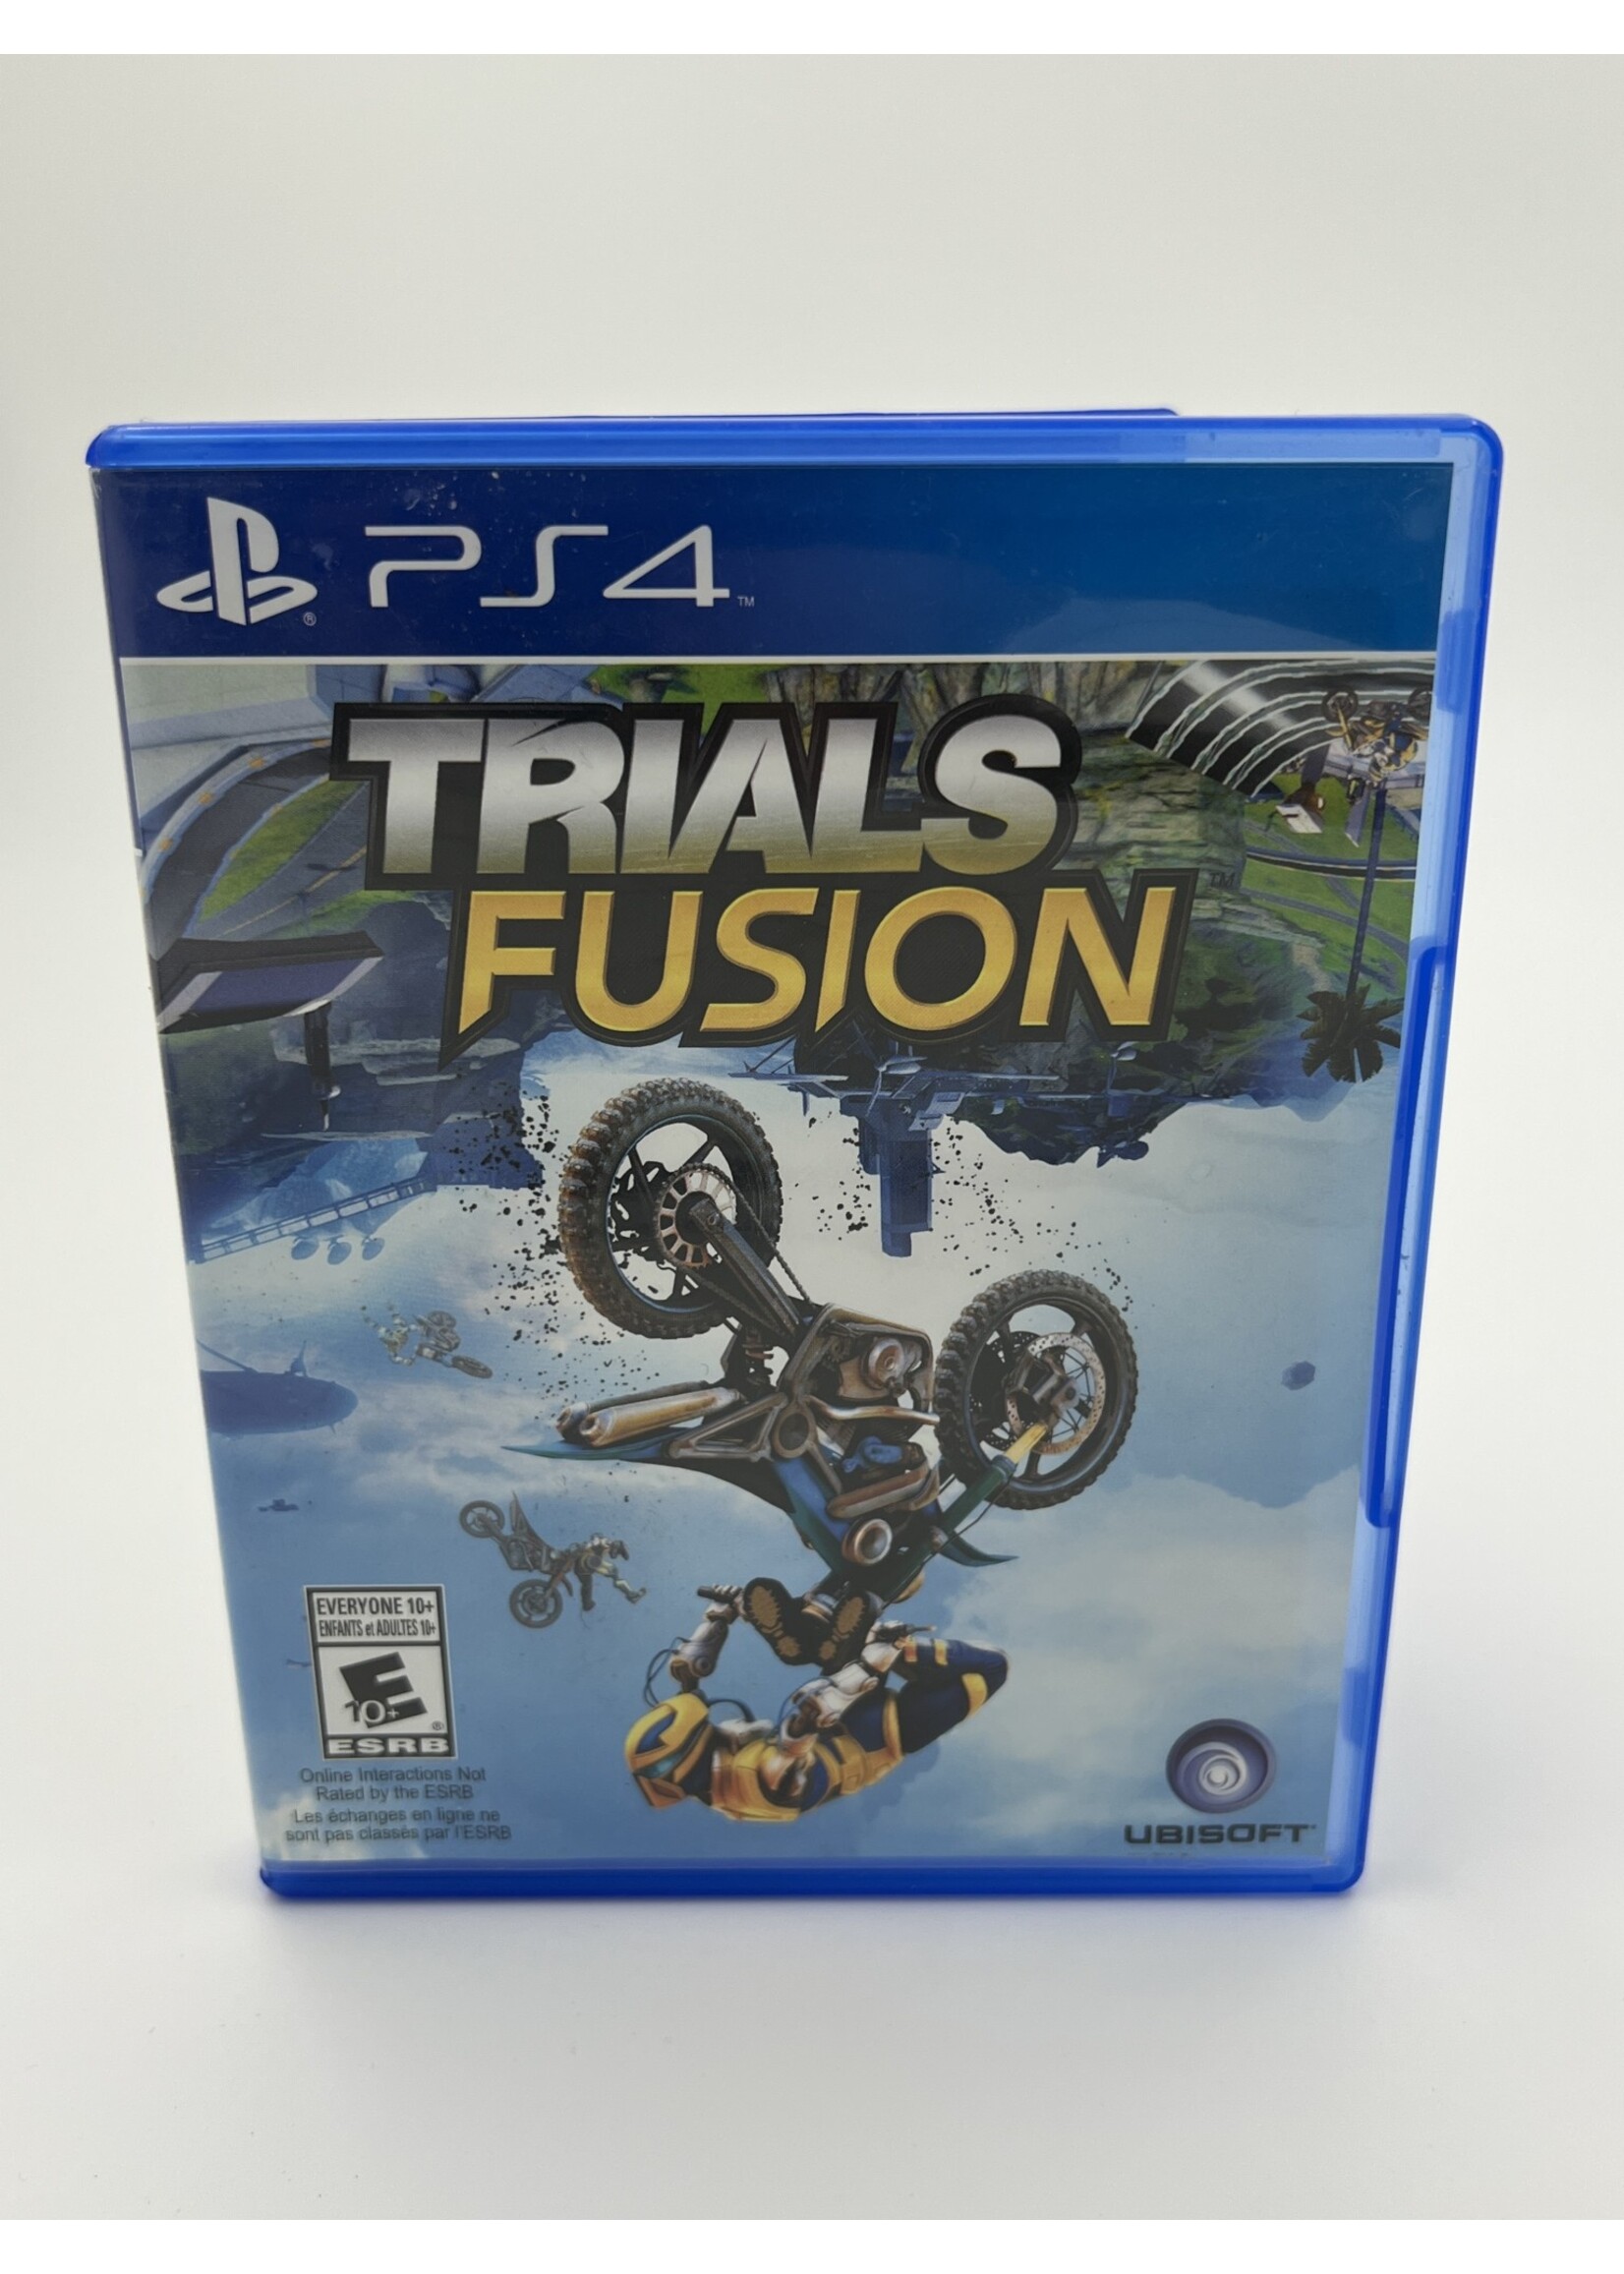 Sony Trials Fusion PS4